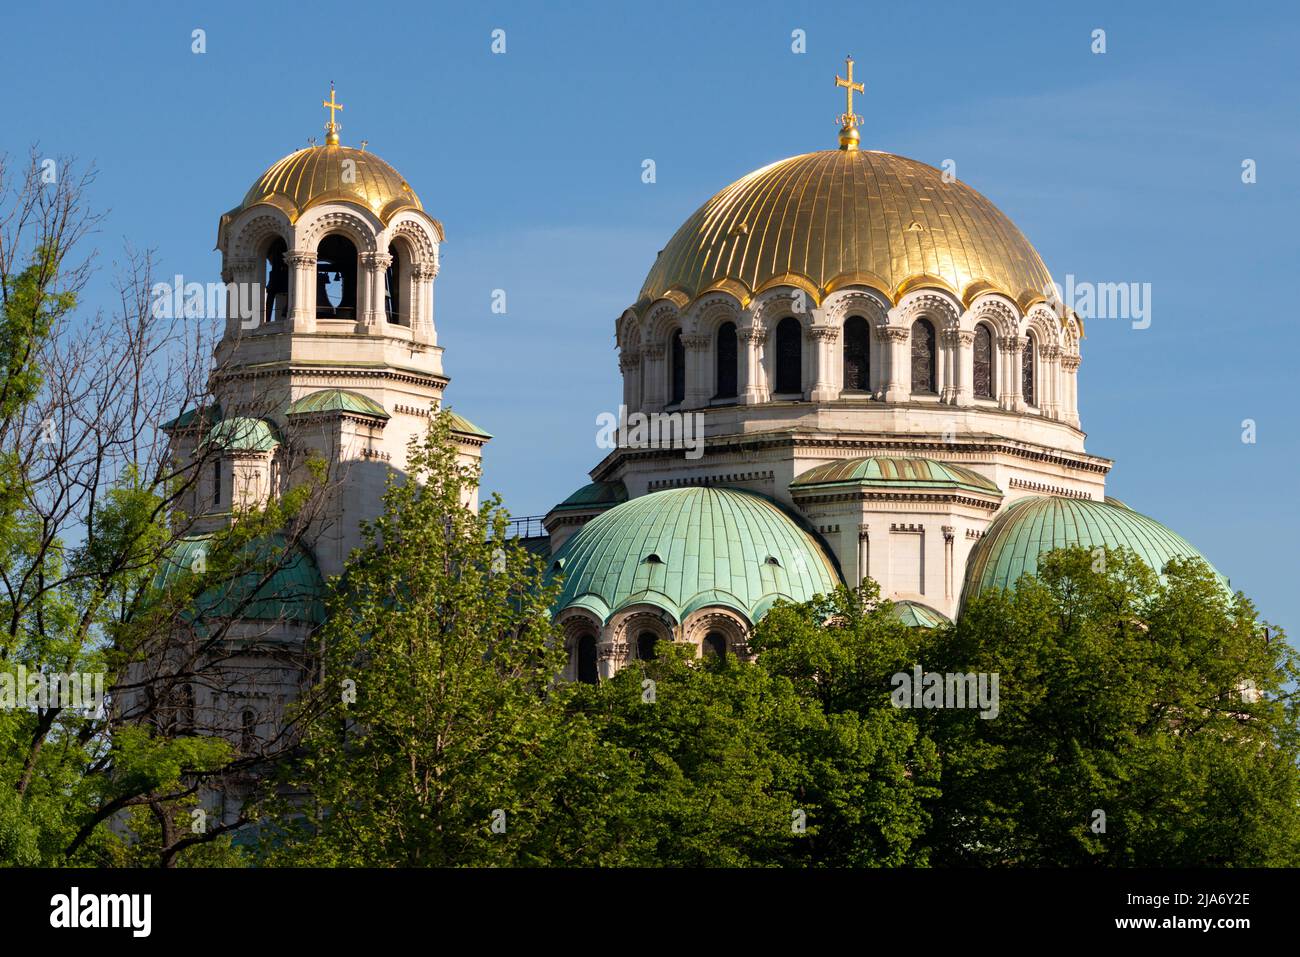 Goldene Kuppeln architektonisches Detail von Sv. Alexander Newski Orthodoxe Kathedrale in Sofia, Bulgarien, Balkan, Europa Stockfoto